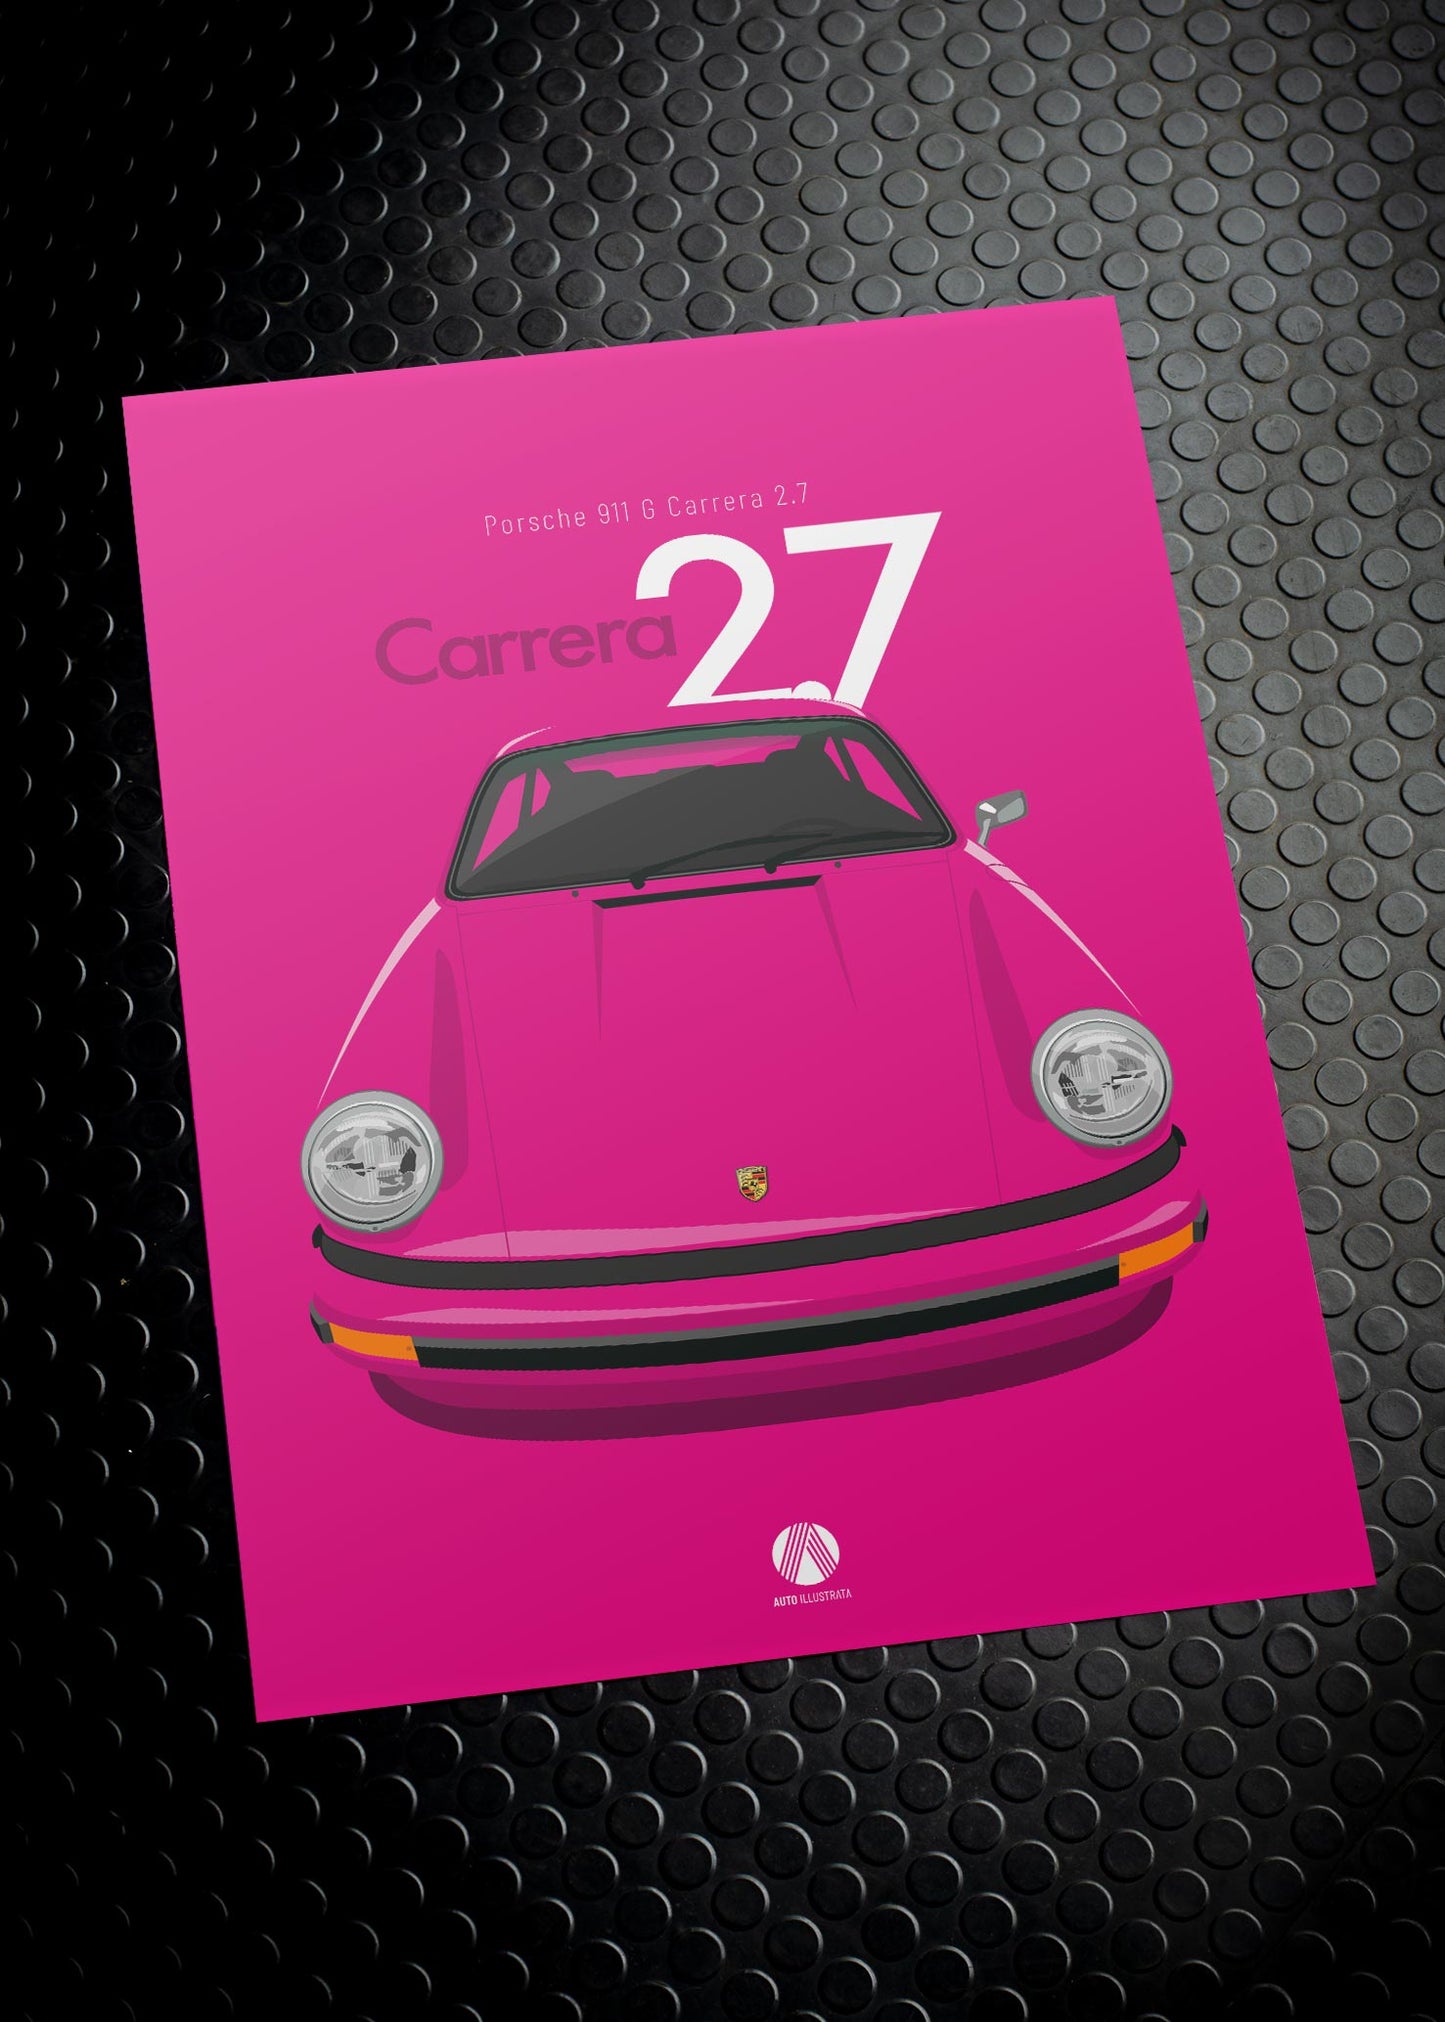 1974 Porsche 911 Carrera 2.7 - 009 Karminrot - poster print